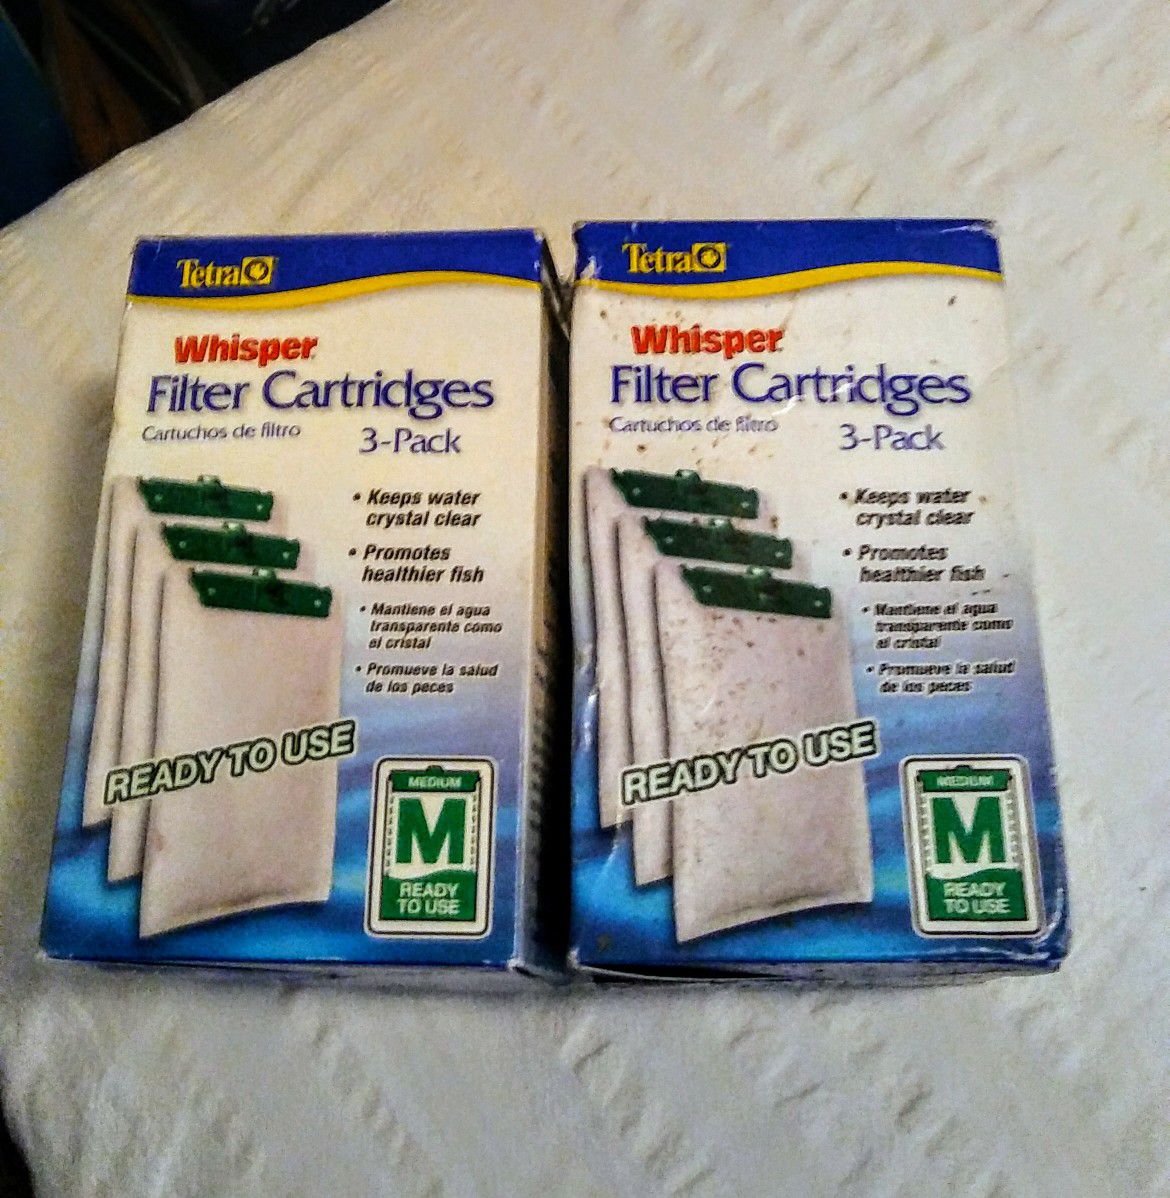 2 Boxes Tetra Whisper Filter Cartridges (3-Pack). Fish Aquarium